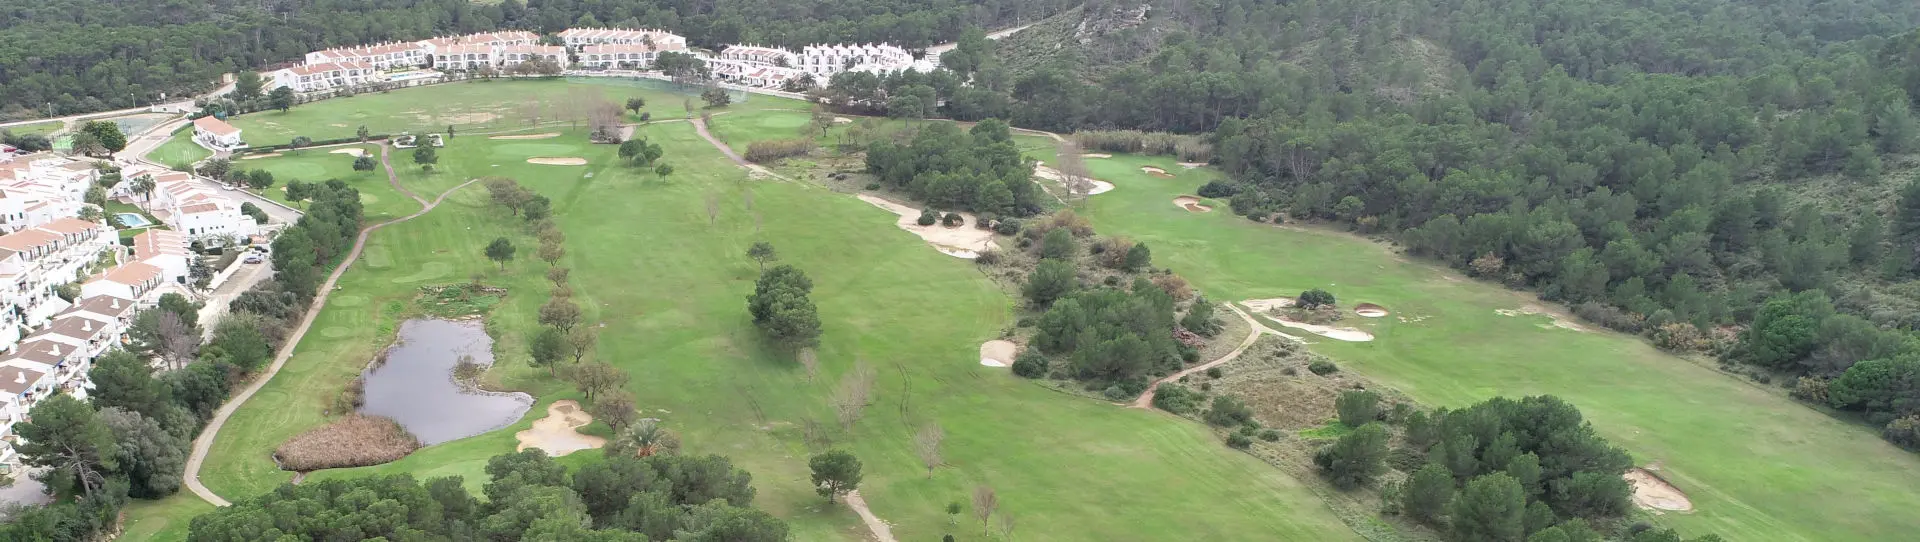 Spain golf courses - Son Parc Menorca Golf Course - Photo 2